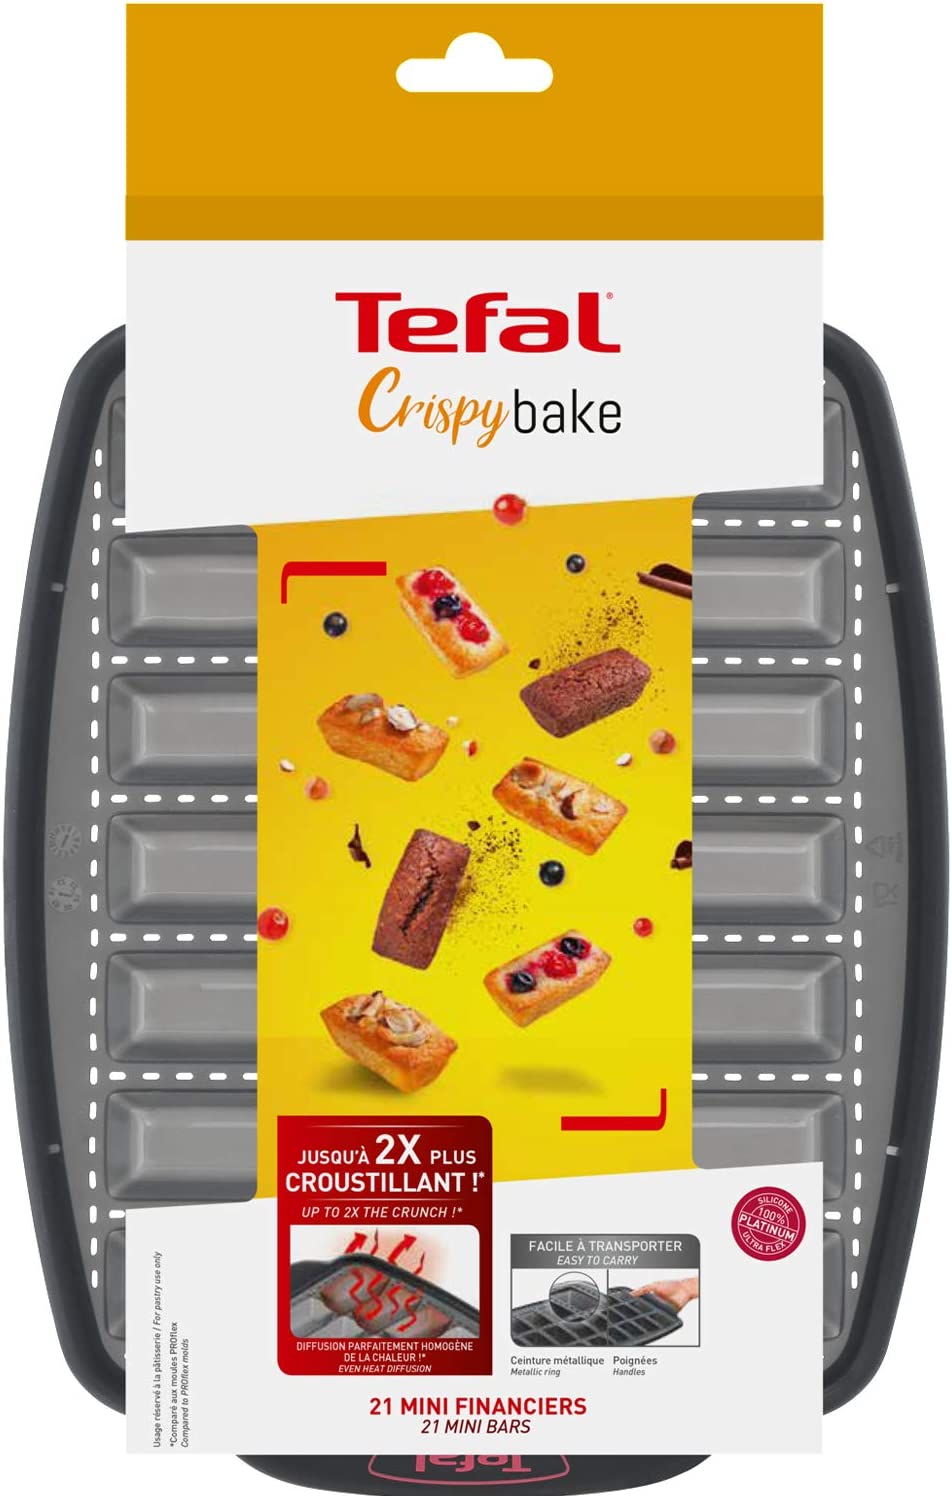 Tefal Cake Factory